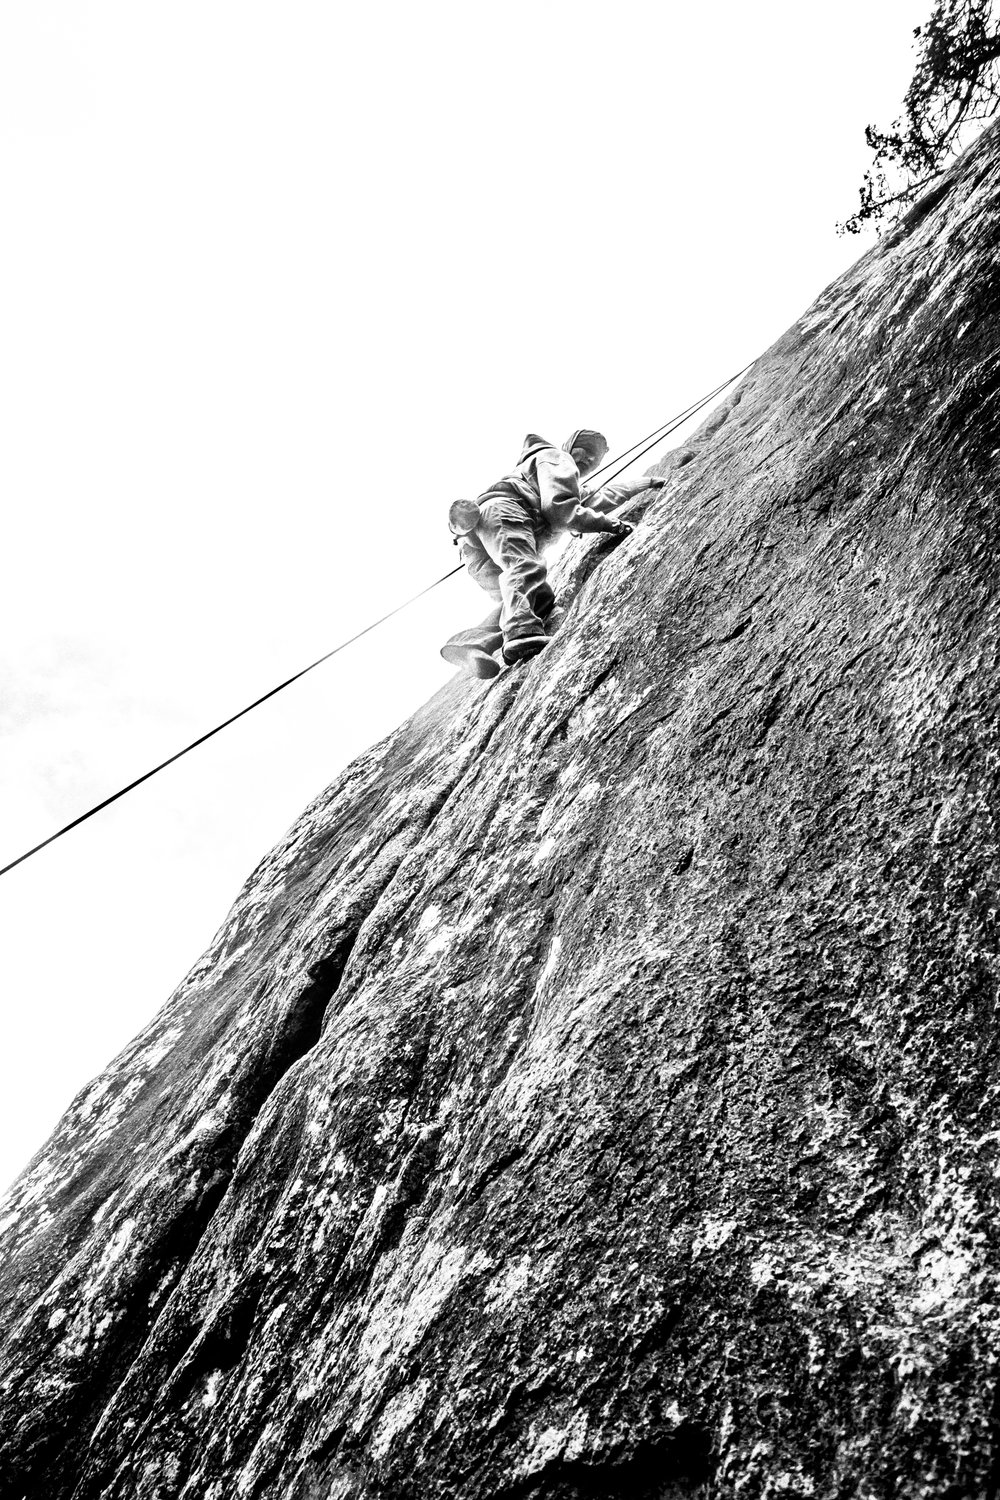 4-22-17 Rock Climbing black & white-11.jpg